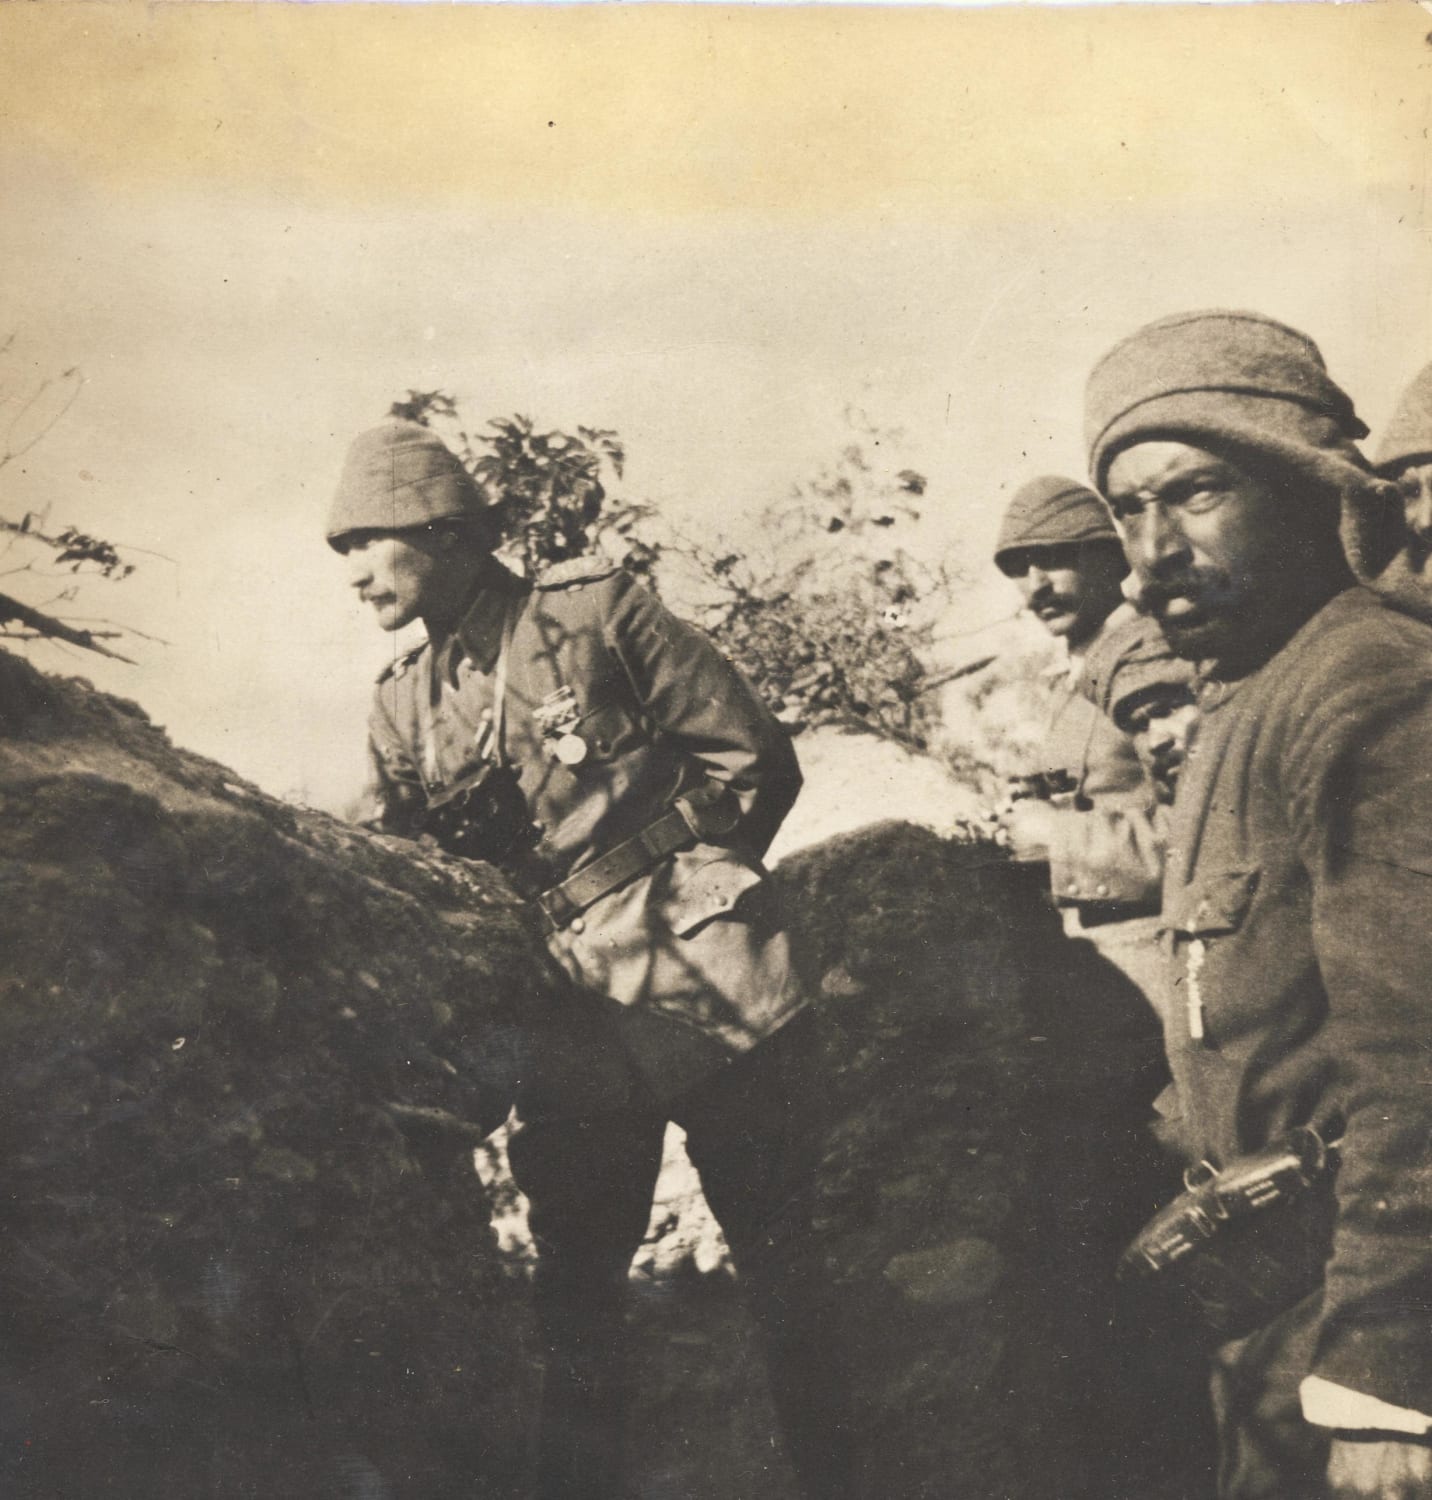 Mustafa Kemal Atatürk in the trench at the Battle of Gallipoli - 1915